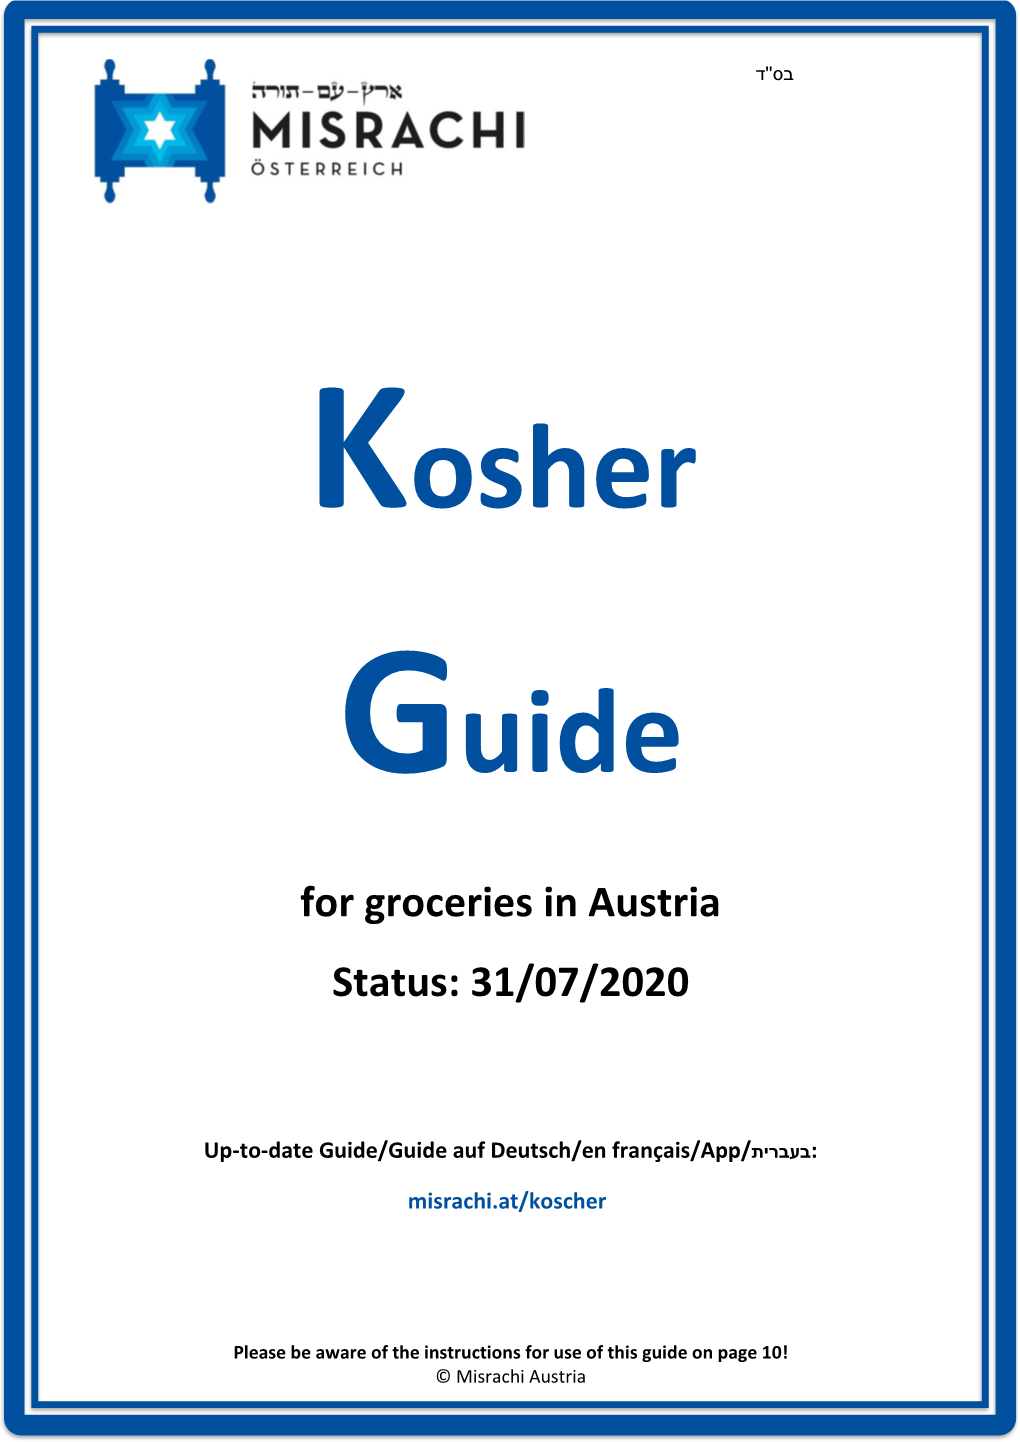 Kosher Guide of Misrachi Austria